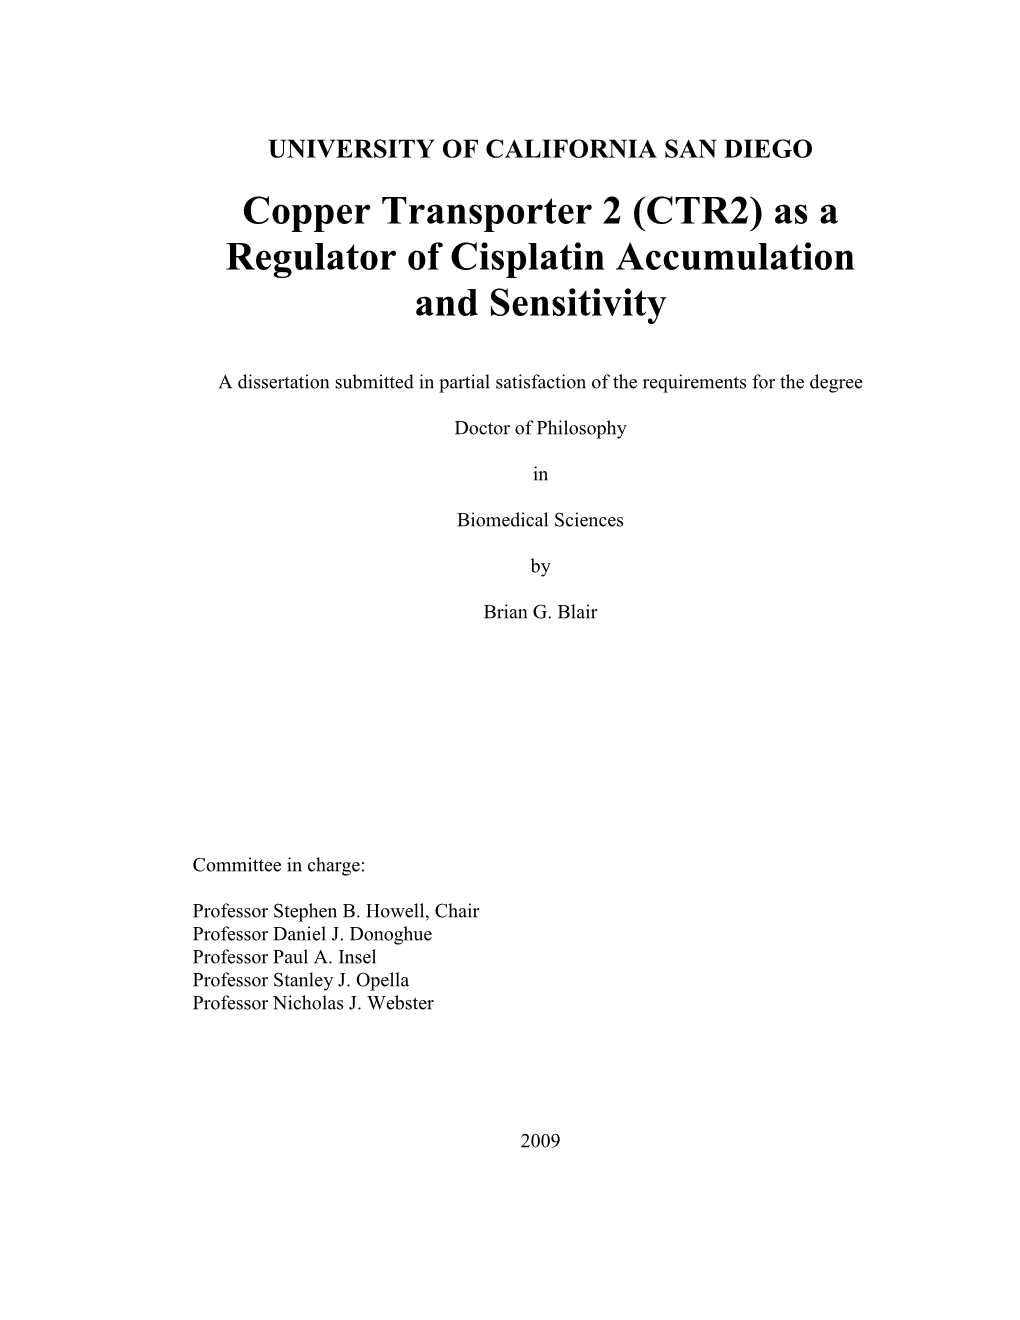 Copper Transporter 2 (CTR2) As a Regulator of Cisplatin Accumulation and Sensitivity